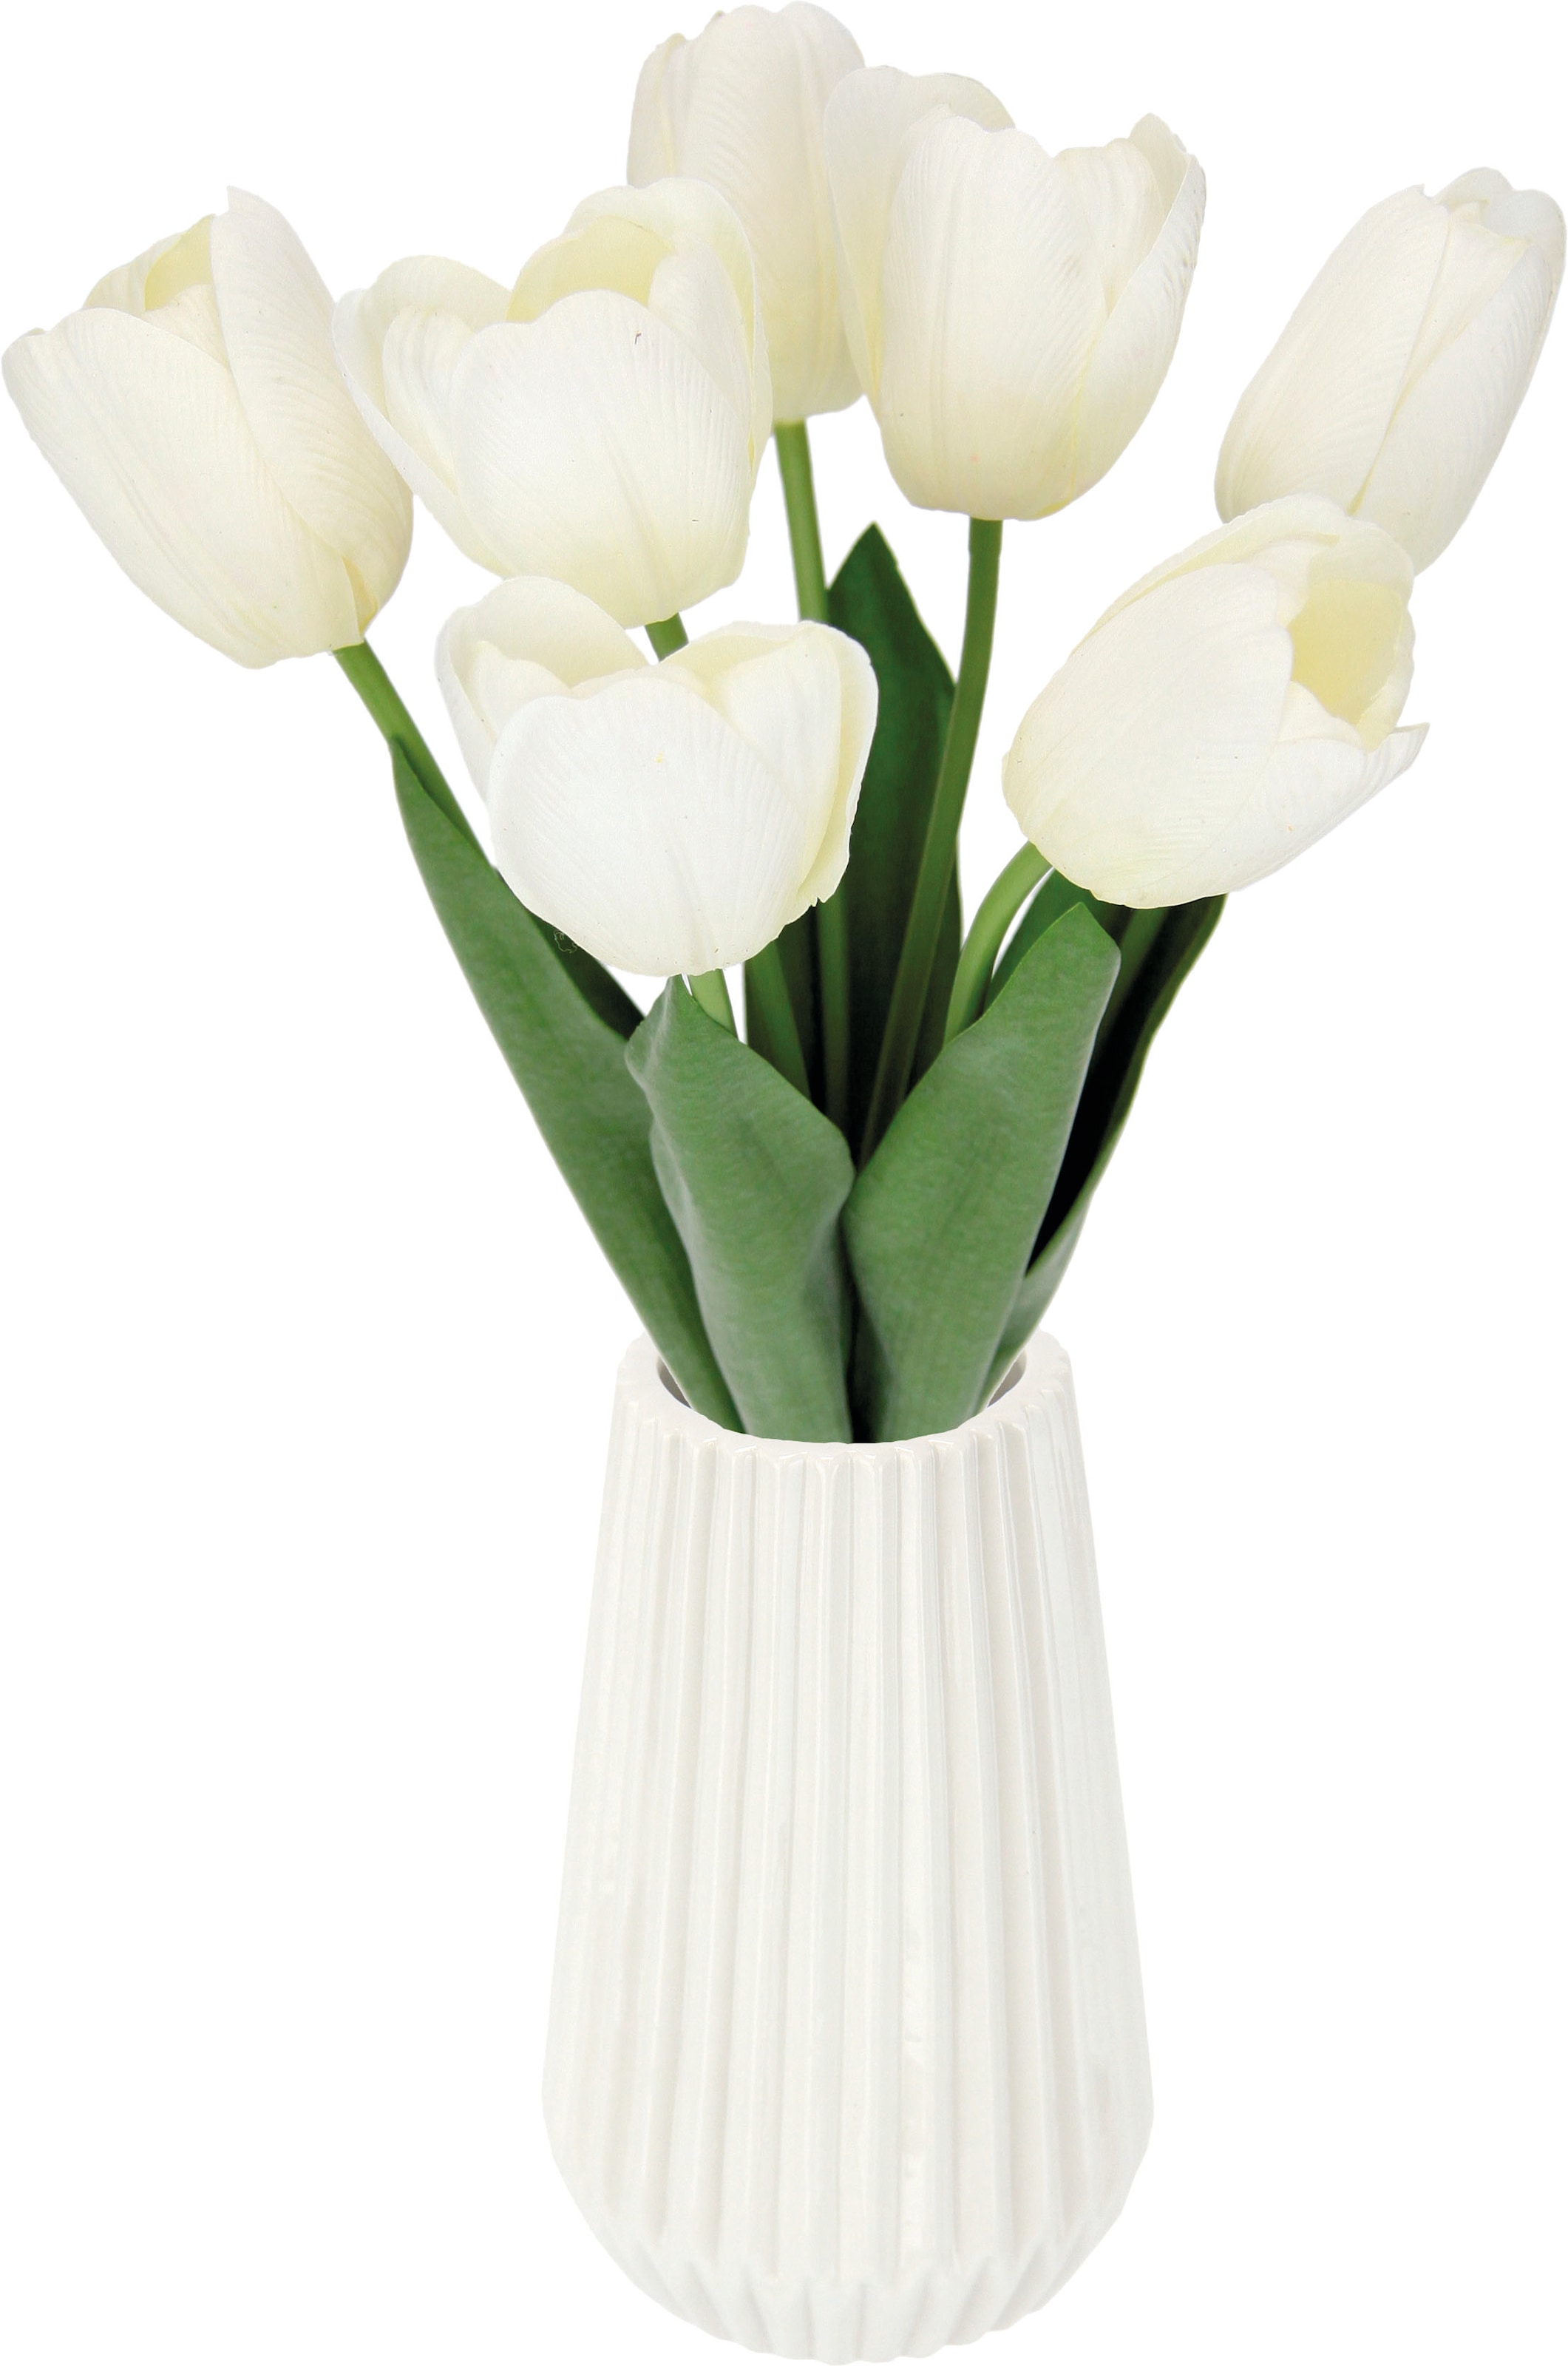 I.GE.A. Kunstblume »Real-Touch-Tulpen«, Keramik bestellen Vase bequem aus